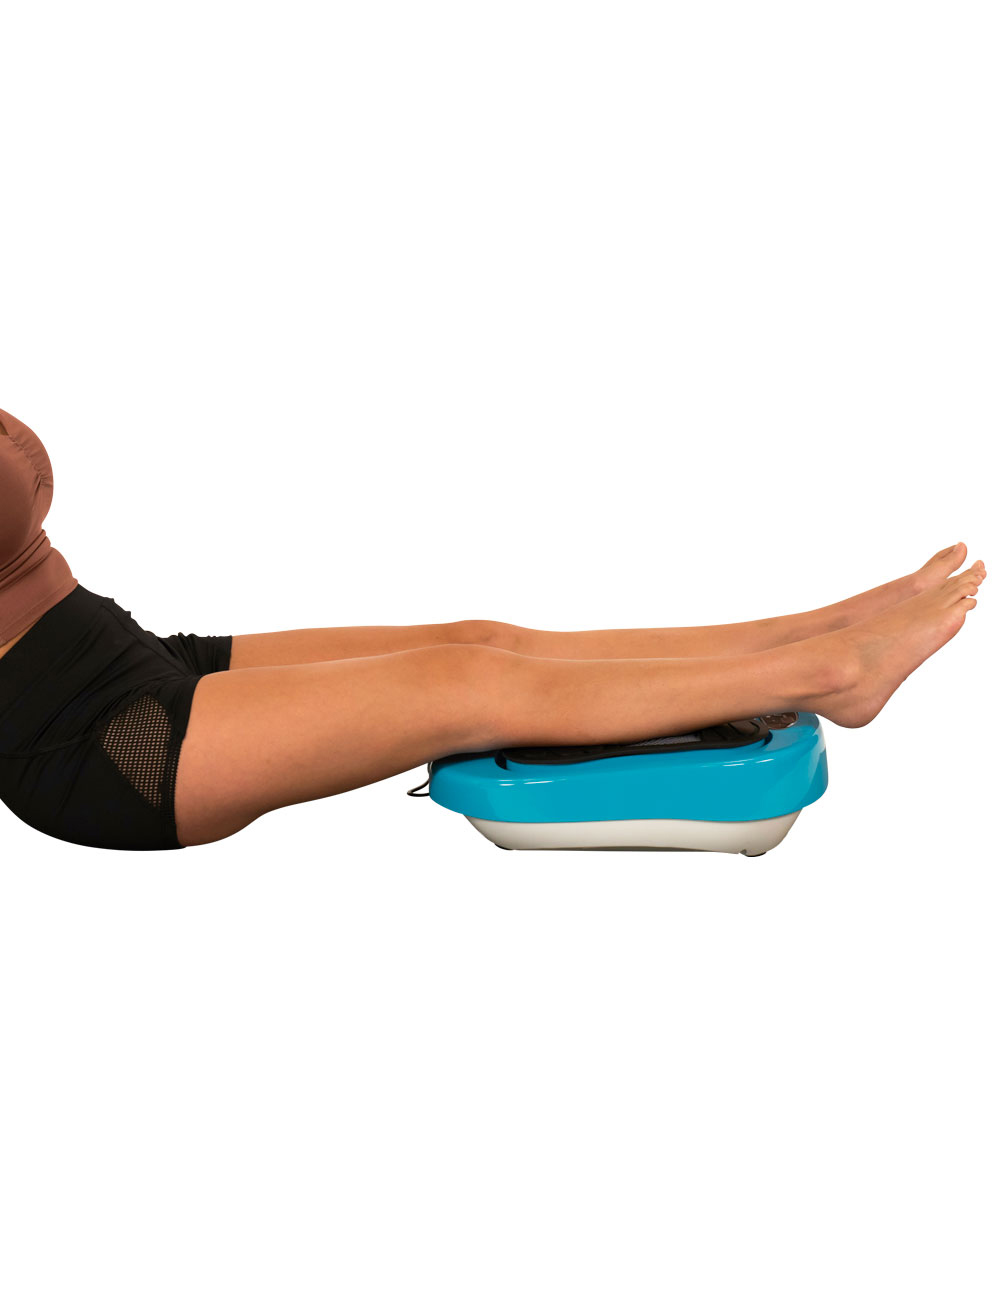 gymform-leg-action-appareil-massage-jambes